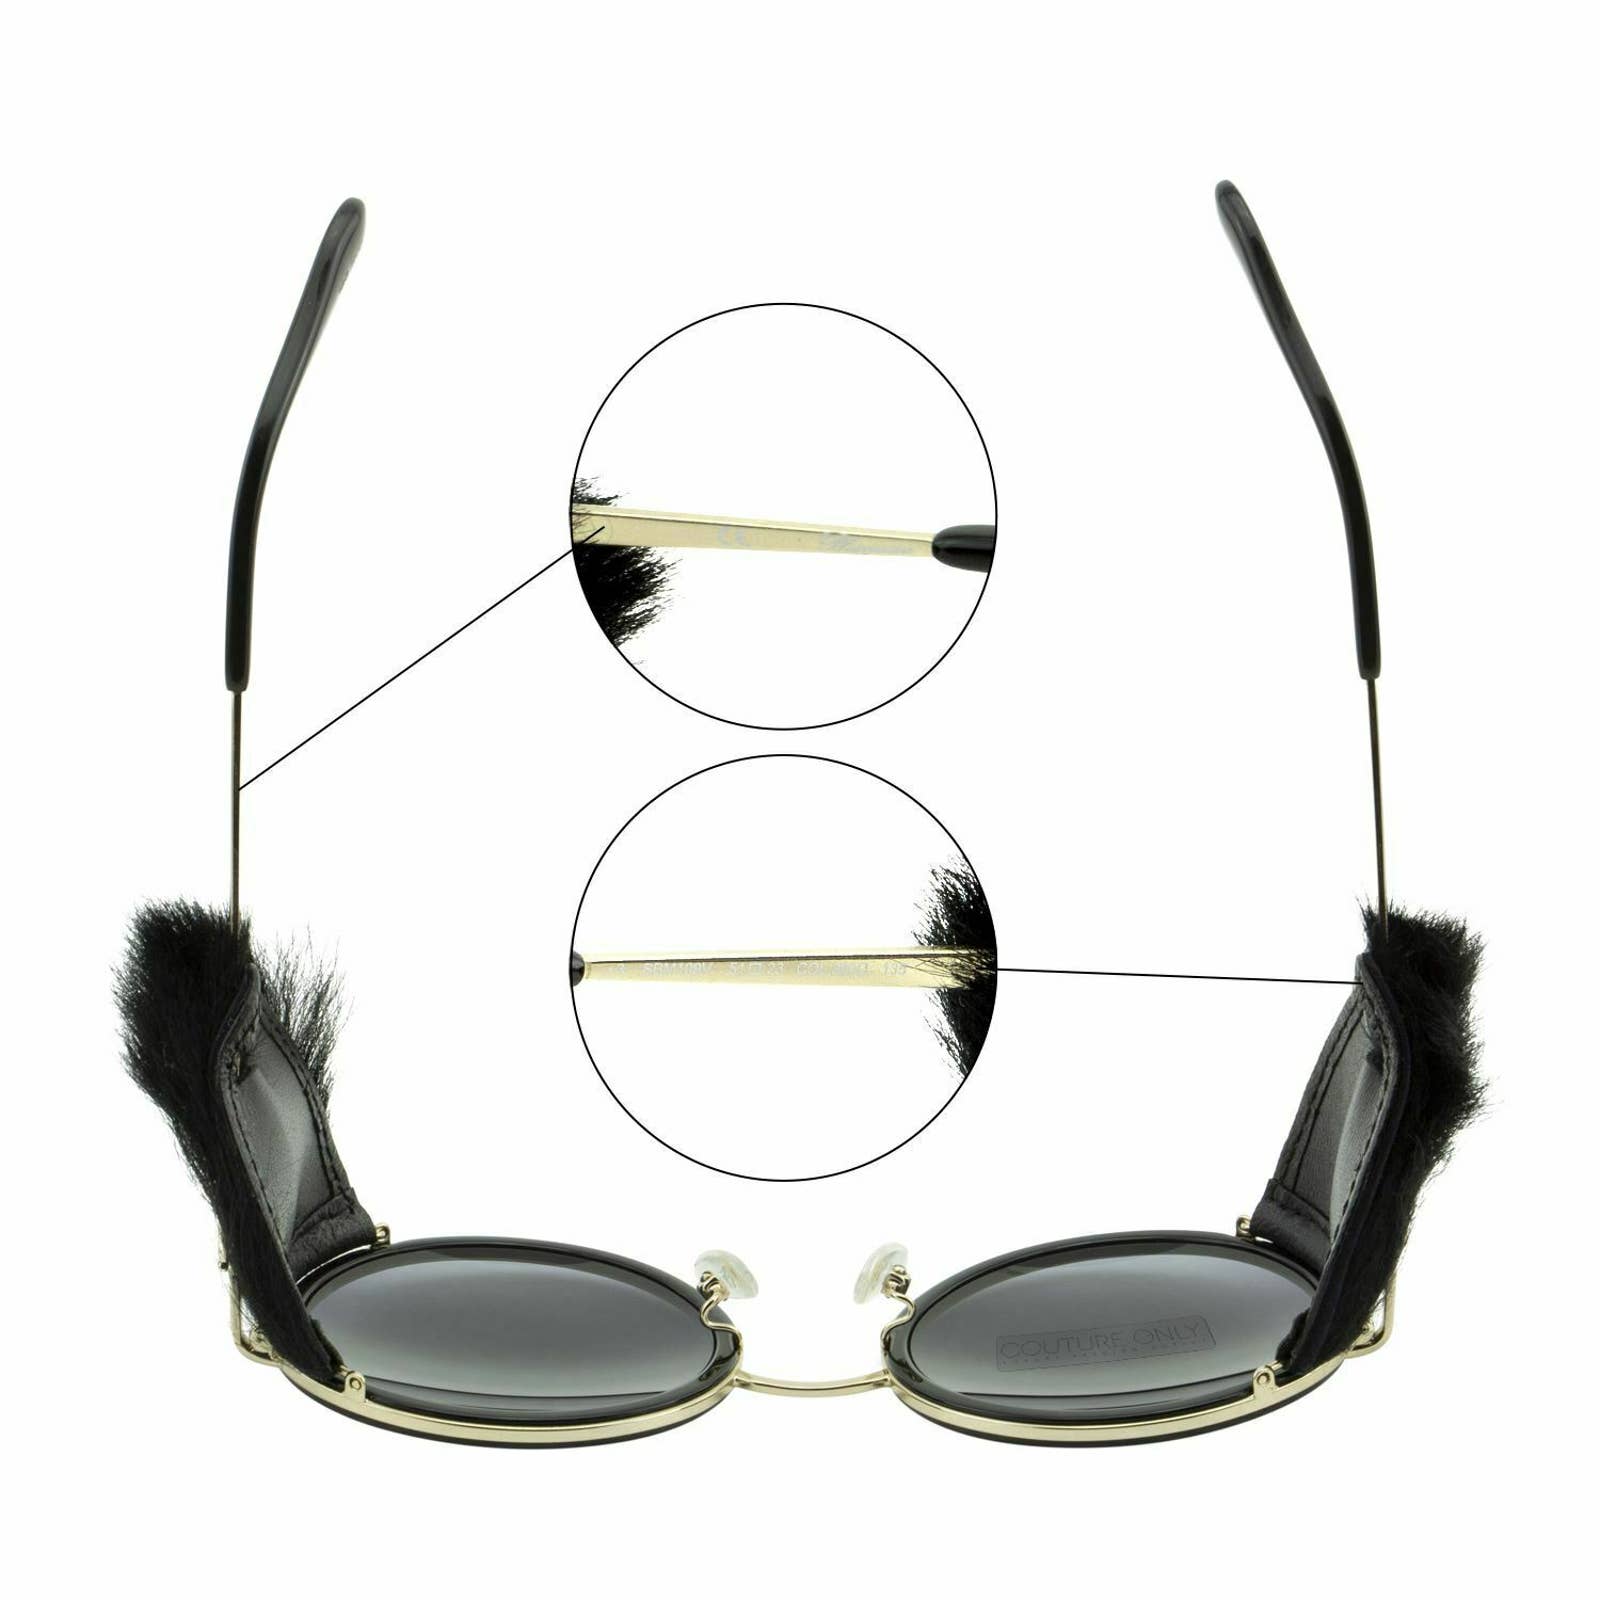 Limited Edition Women Gold Round Sunglasses SBM109S-300G